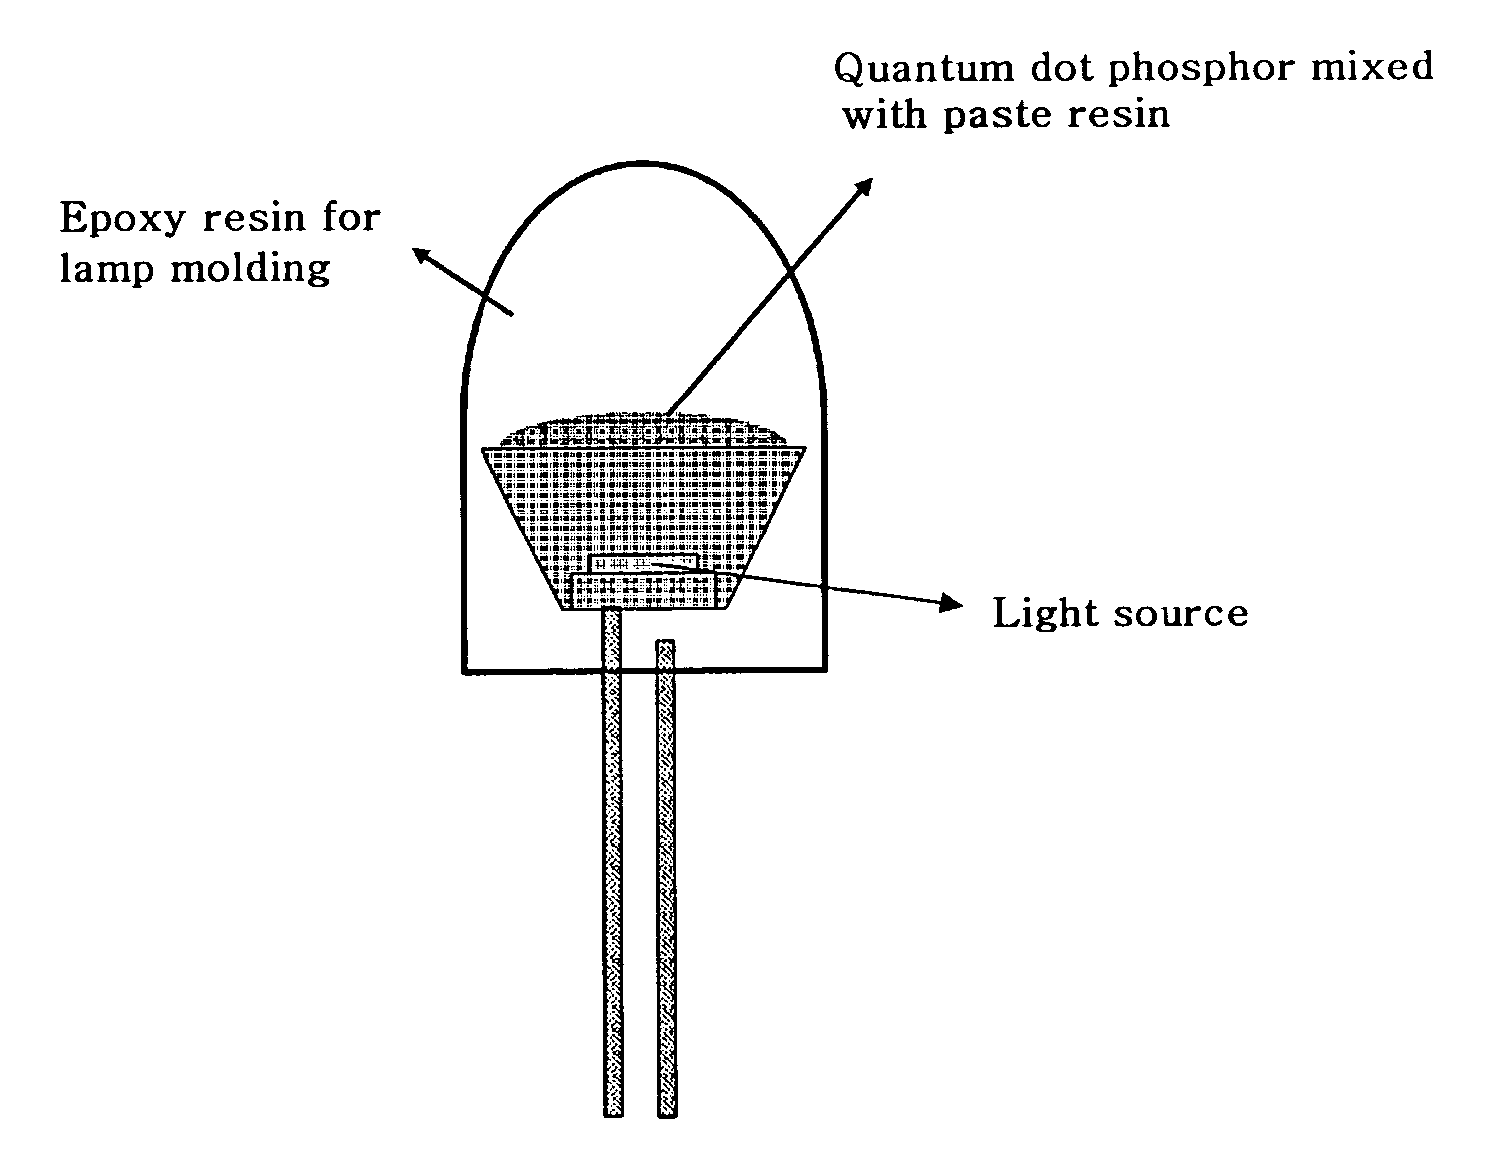 Quantum dot phosphor for light emitting diode and method of preparing the same